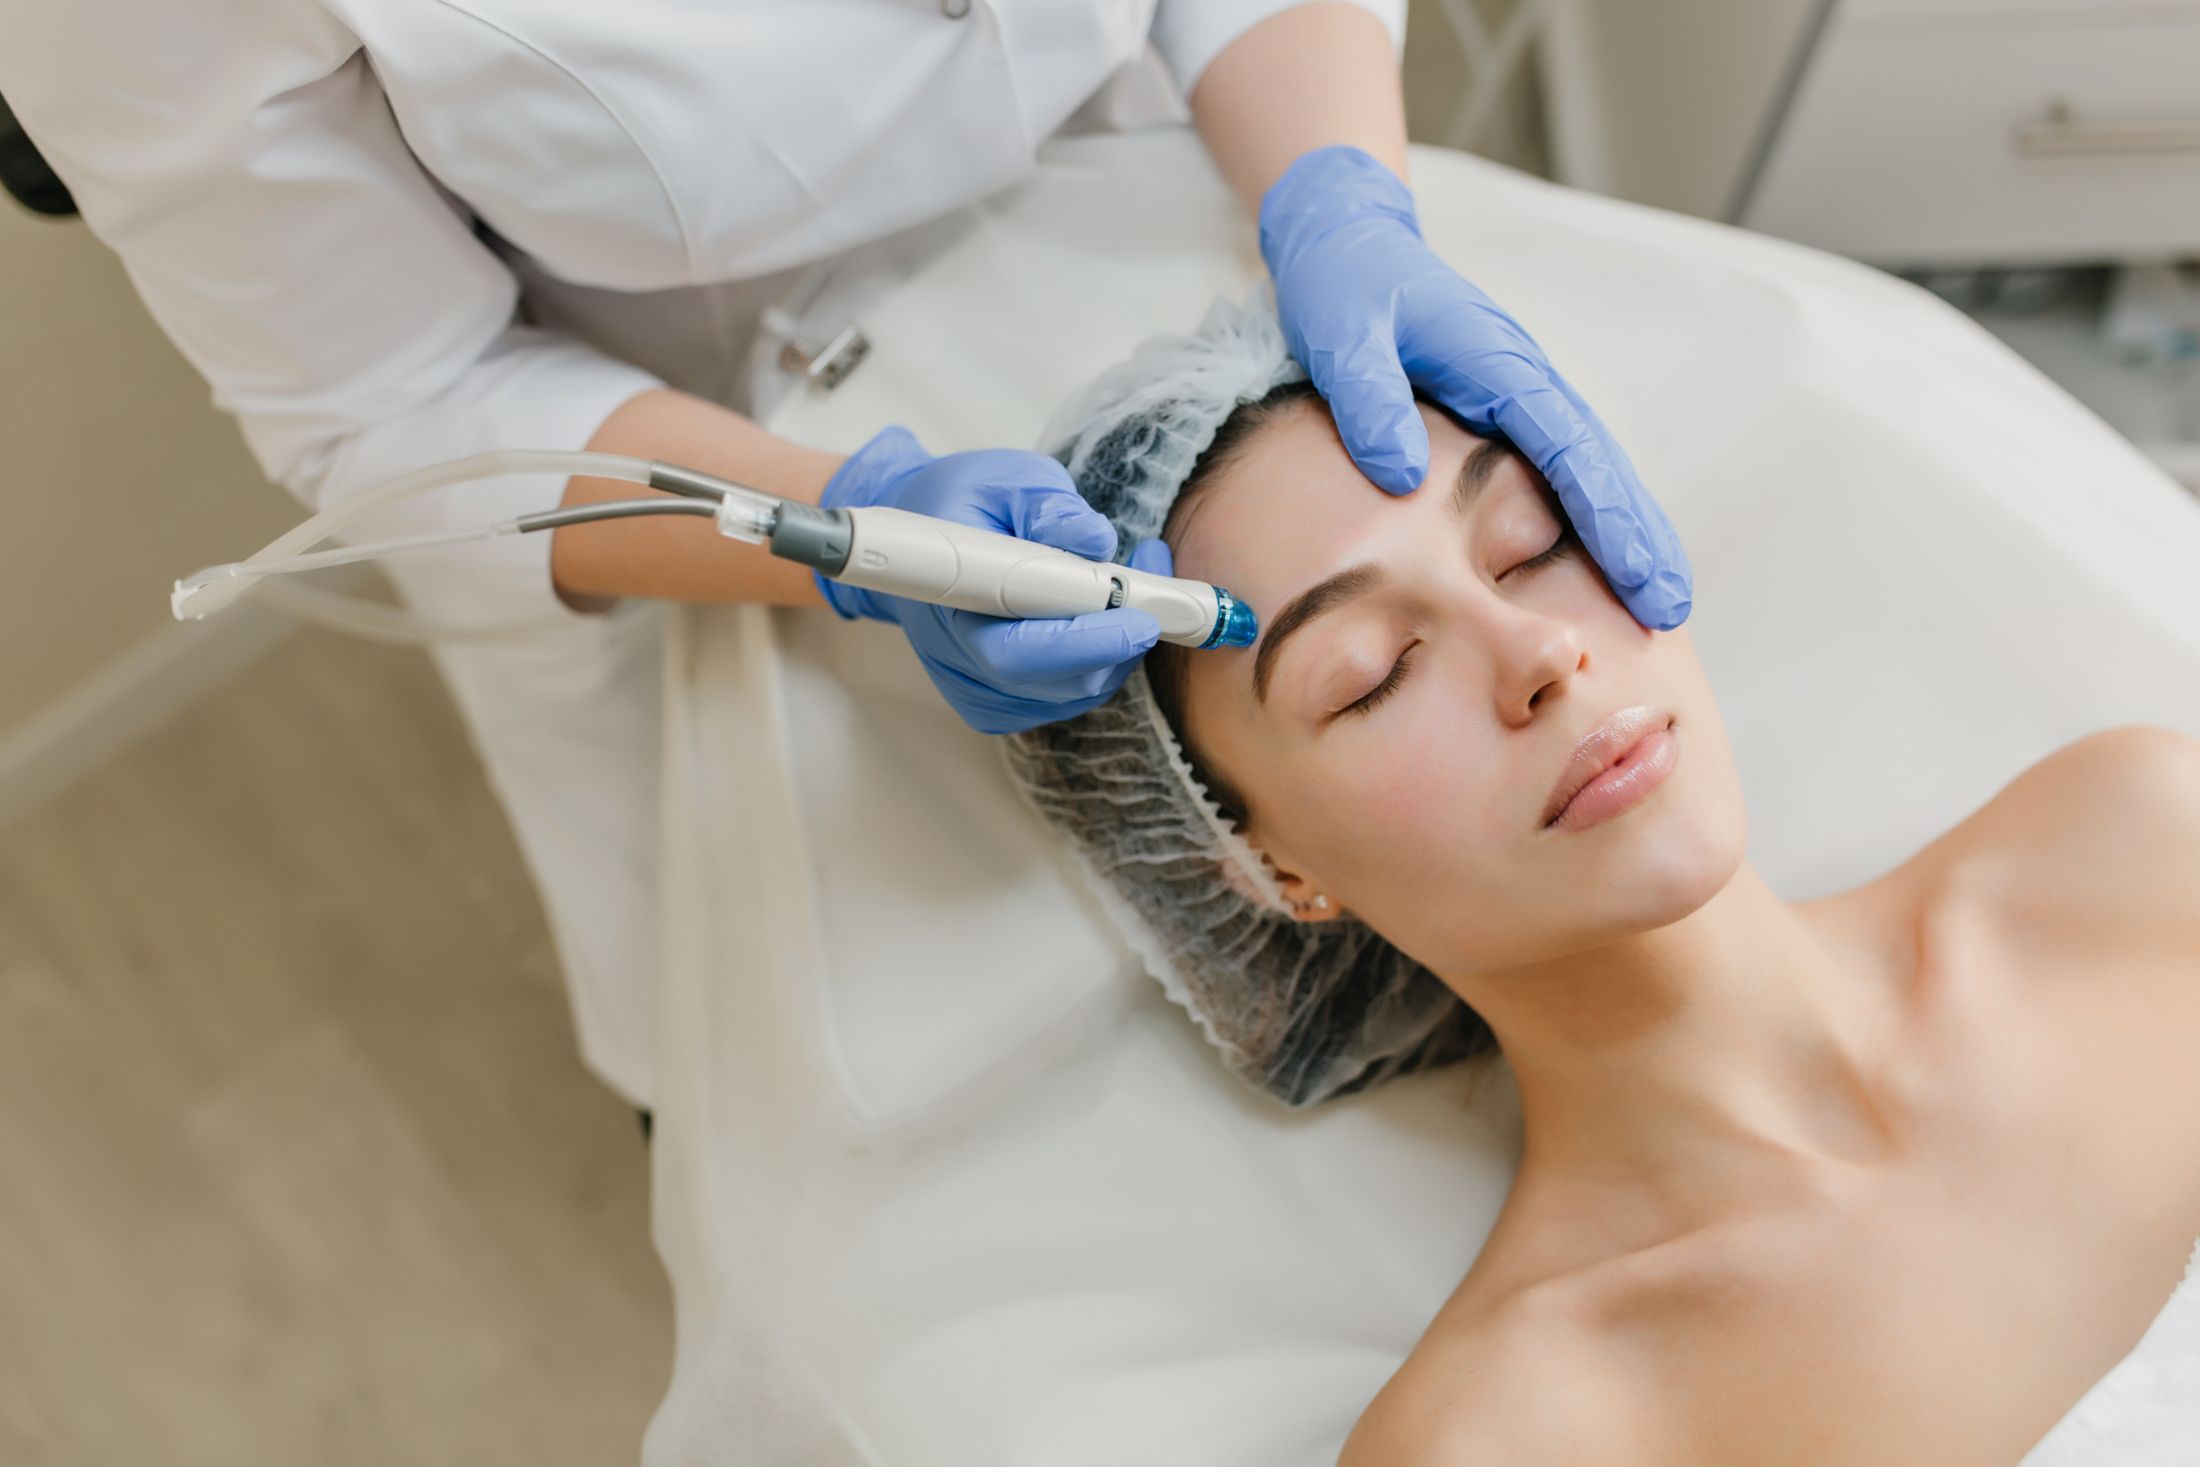 view-from-rejuvenation-beautiful-woman-enjoying-cosmetology-procedures-beauty-salon-dermatology-hands-blue-glows-healthcare-therapy-botox.jpg